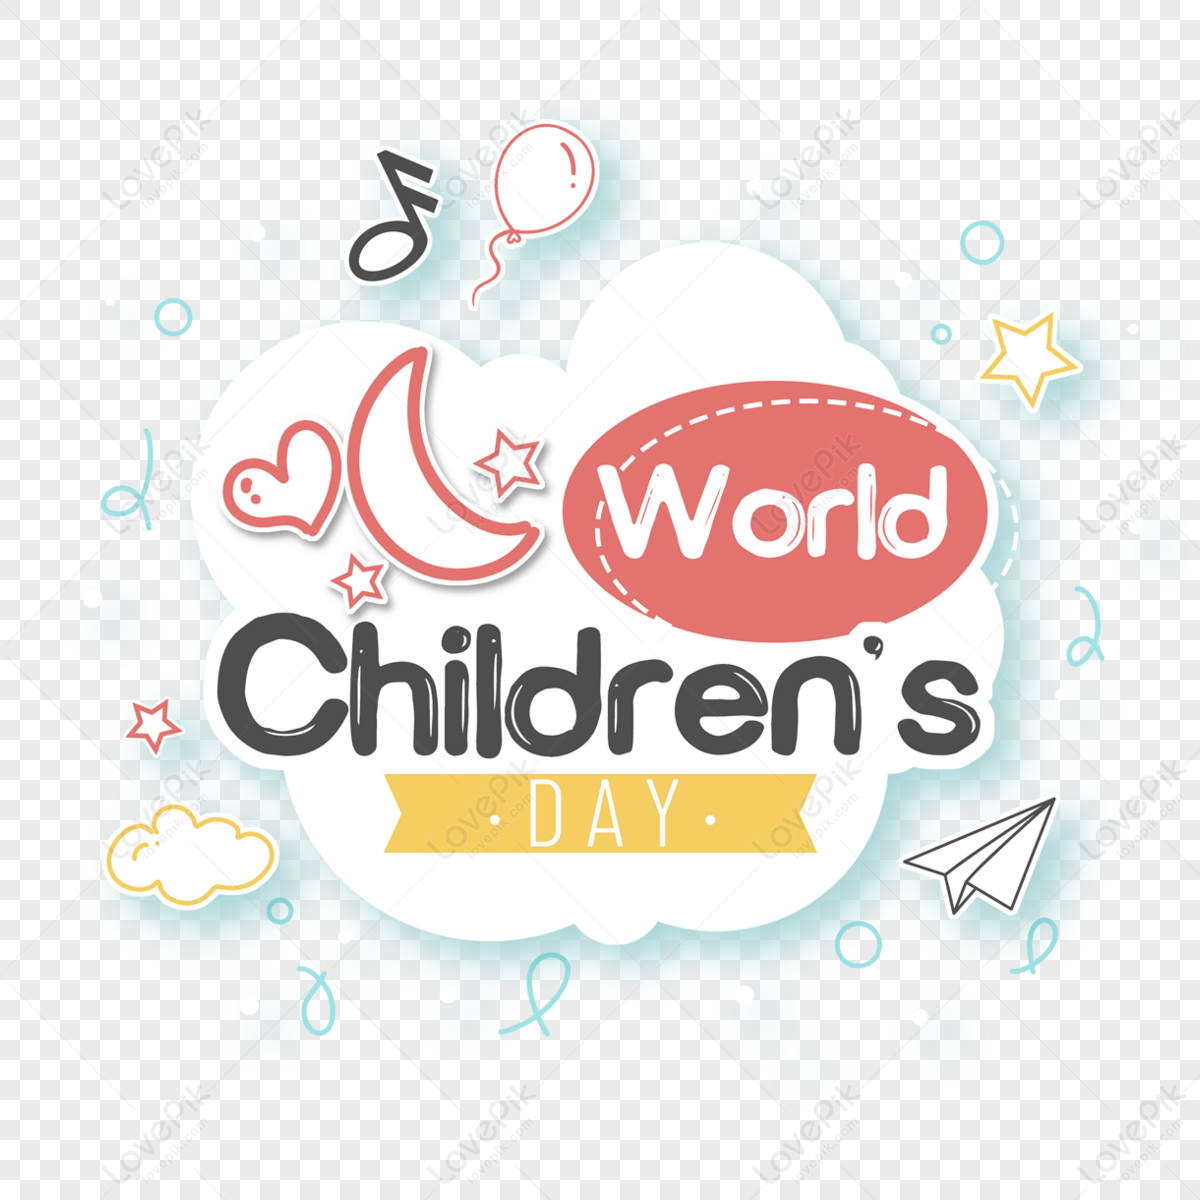 Children day logo Vectors & Illustrations for Free Download | Freepik